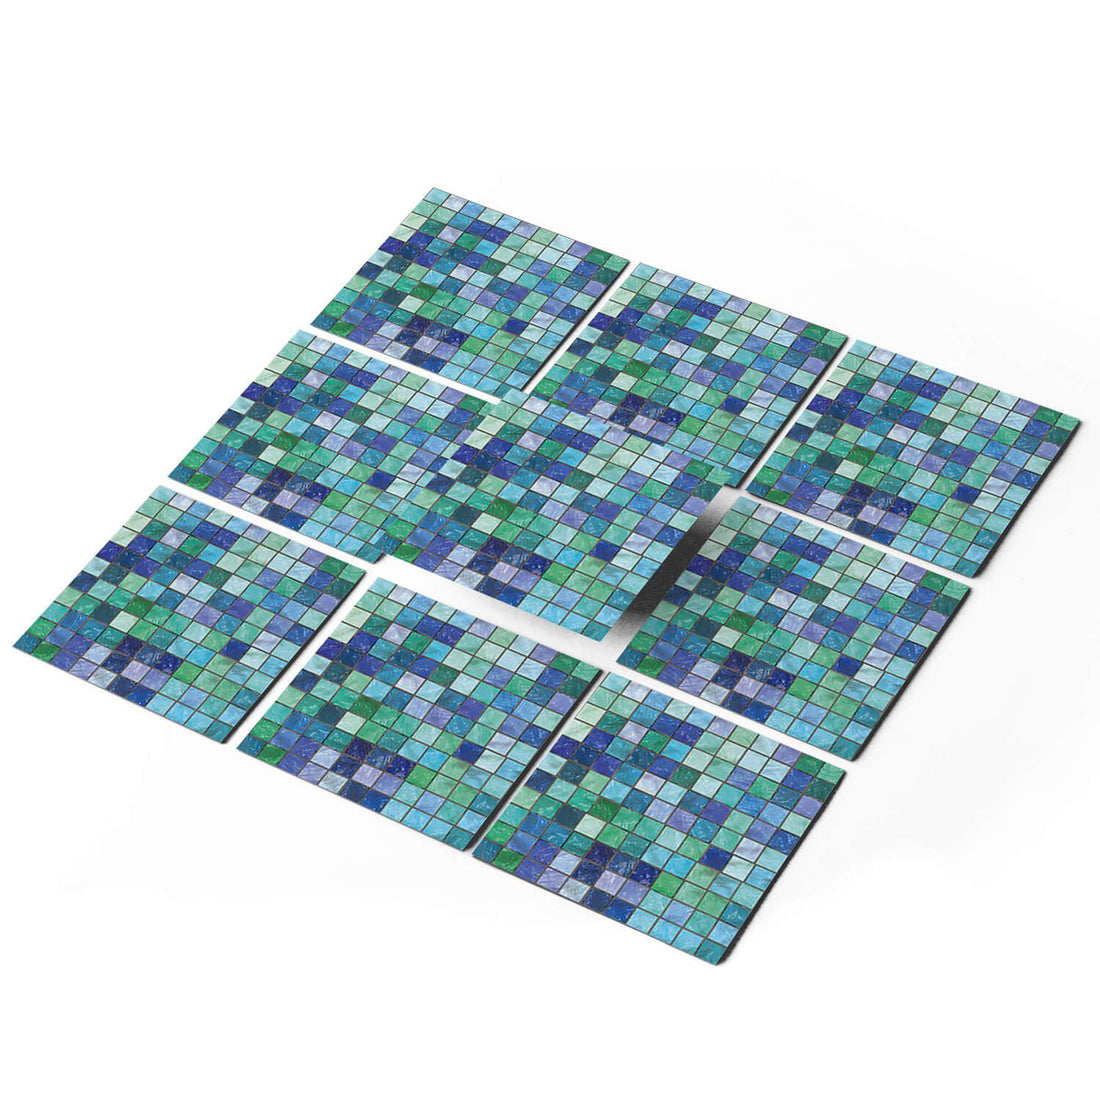 Fliesenfolie - Mosaik Grün-Blau - Do-it-yourself - creatisto pds1